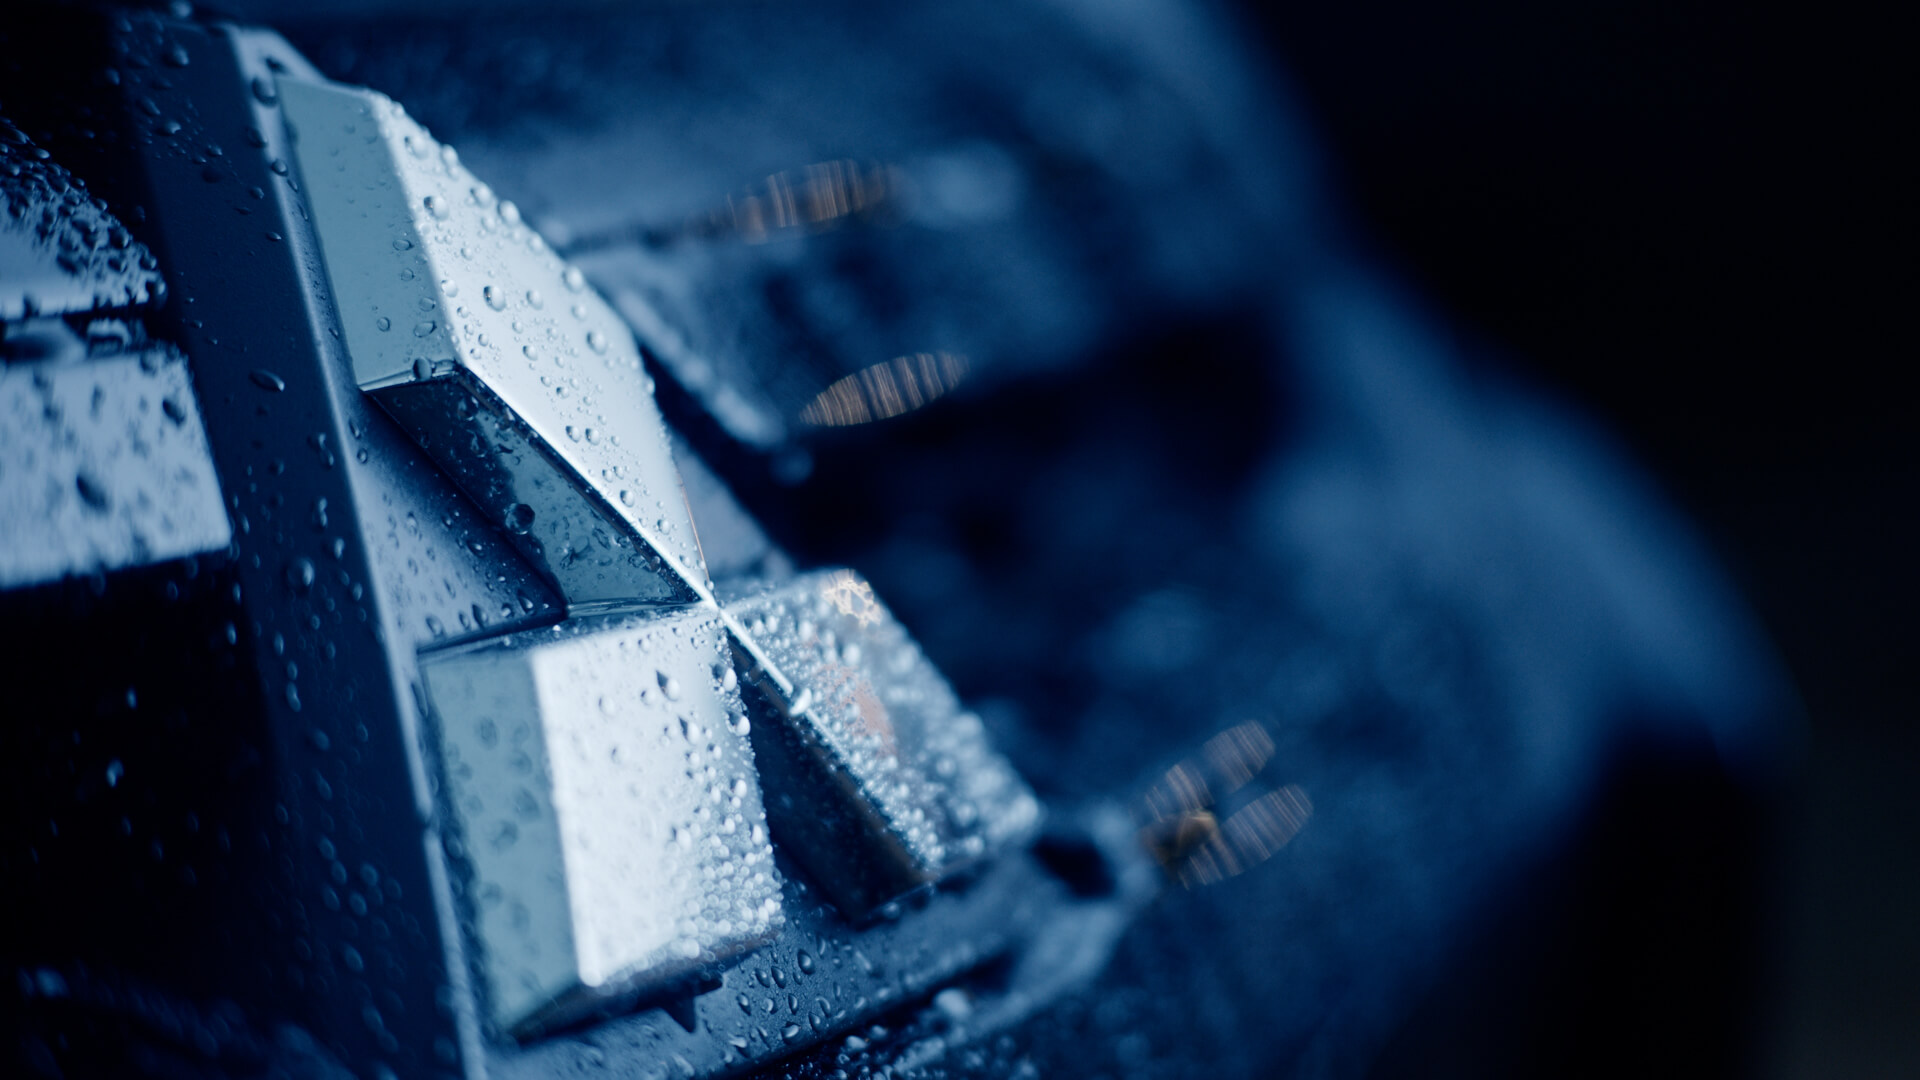 A close up, macro photography shot of the Mitsubishi diamond badge with rain drops on it